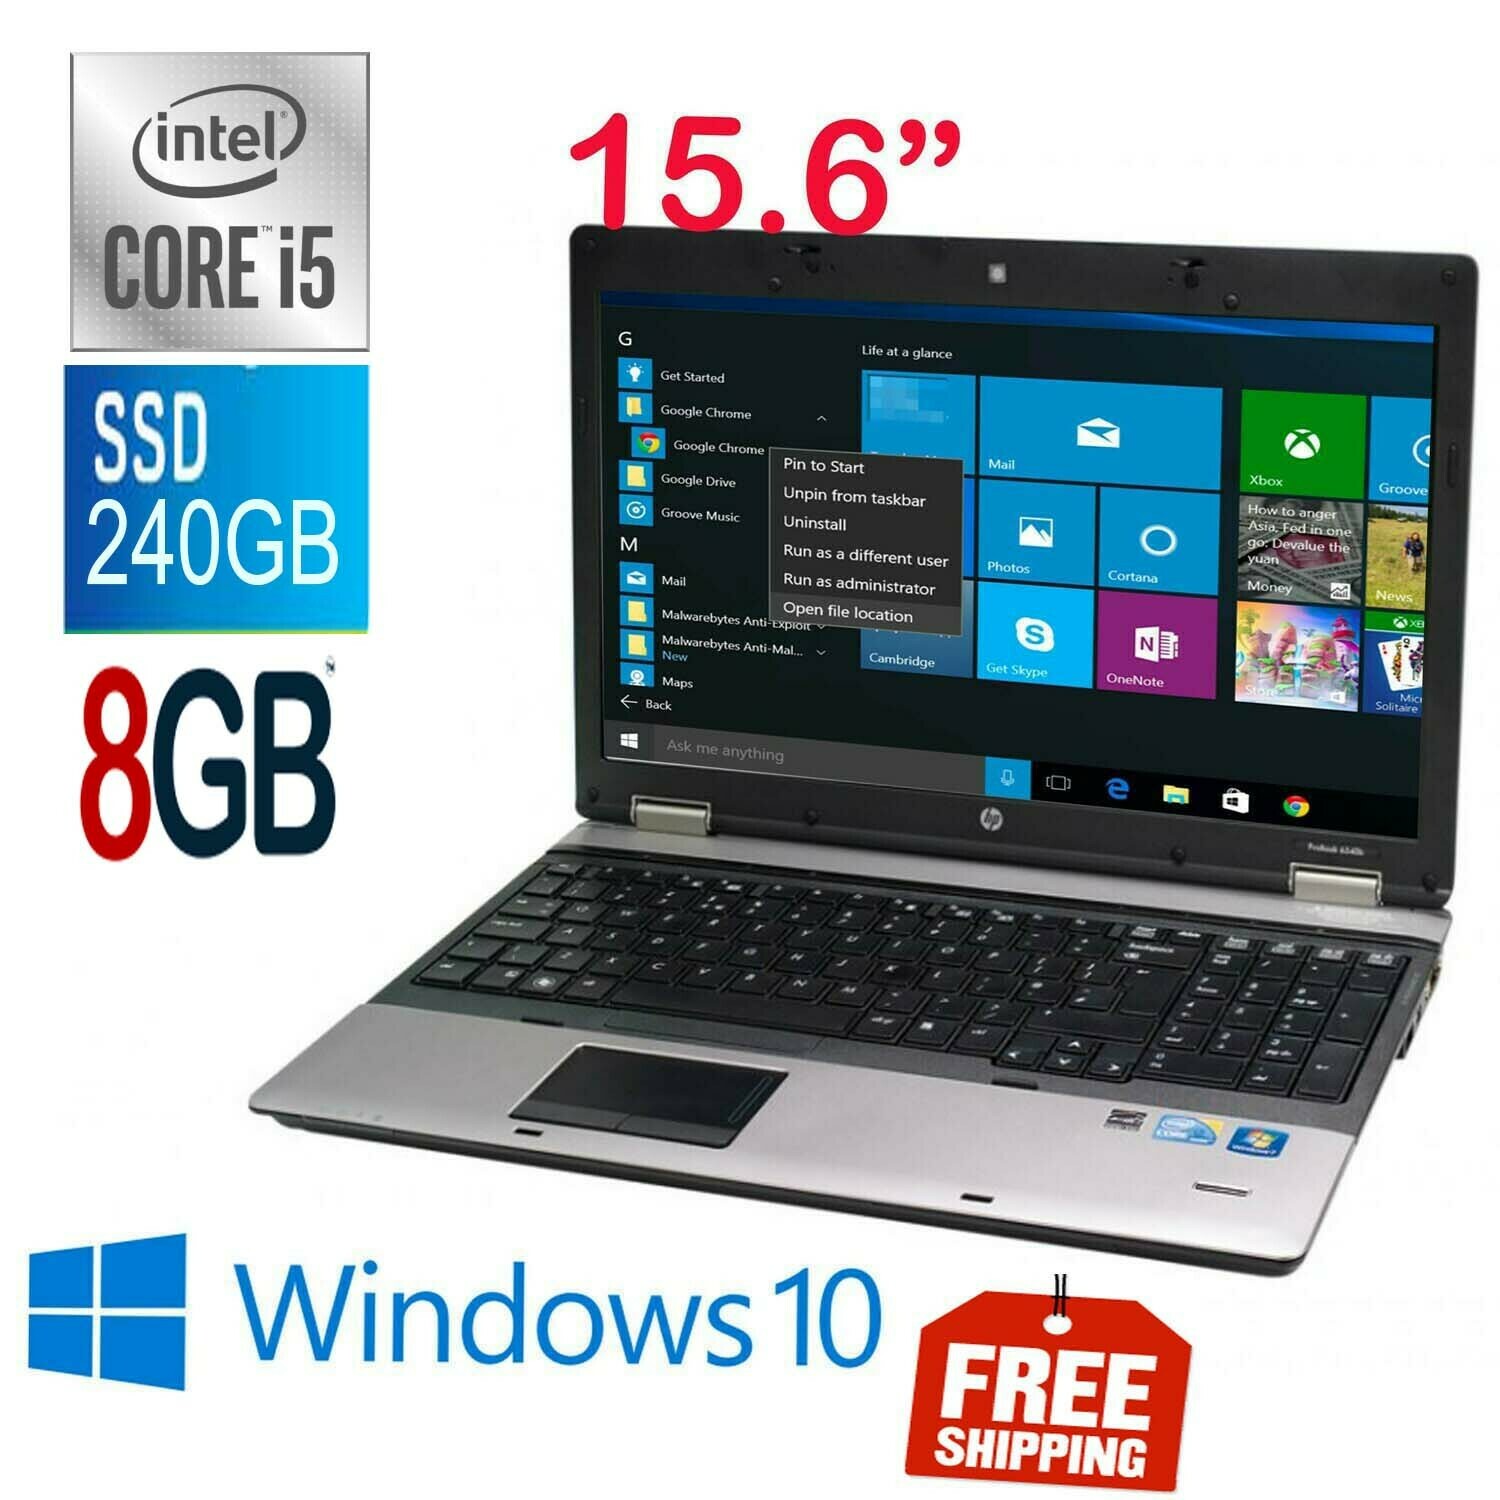 HP Probook 6550B i5 2.4GHz 8GB 240GB SSD-15.6" HD Graphics Notebook Laptop Win10